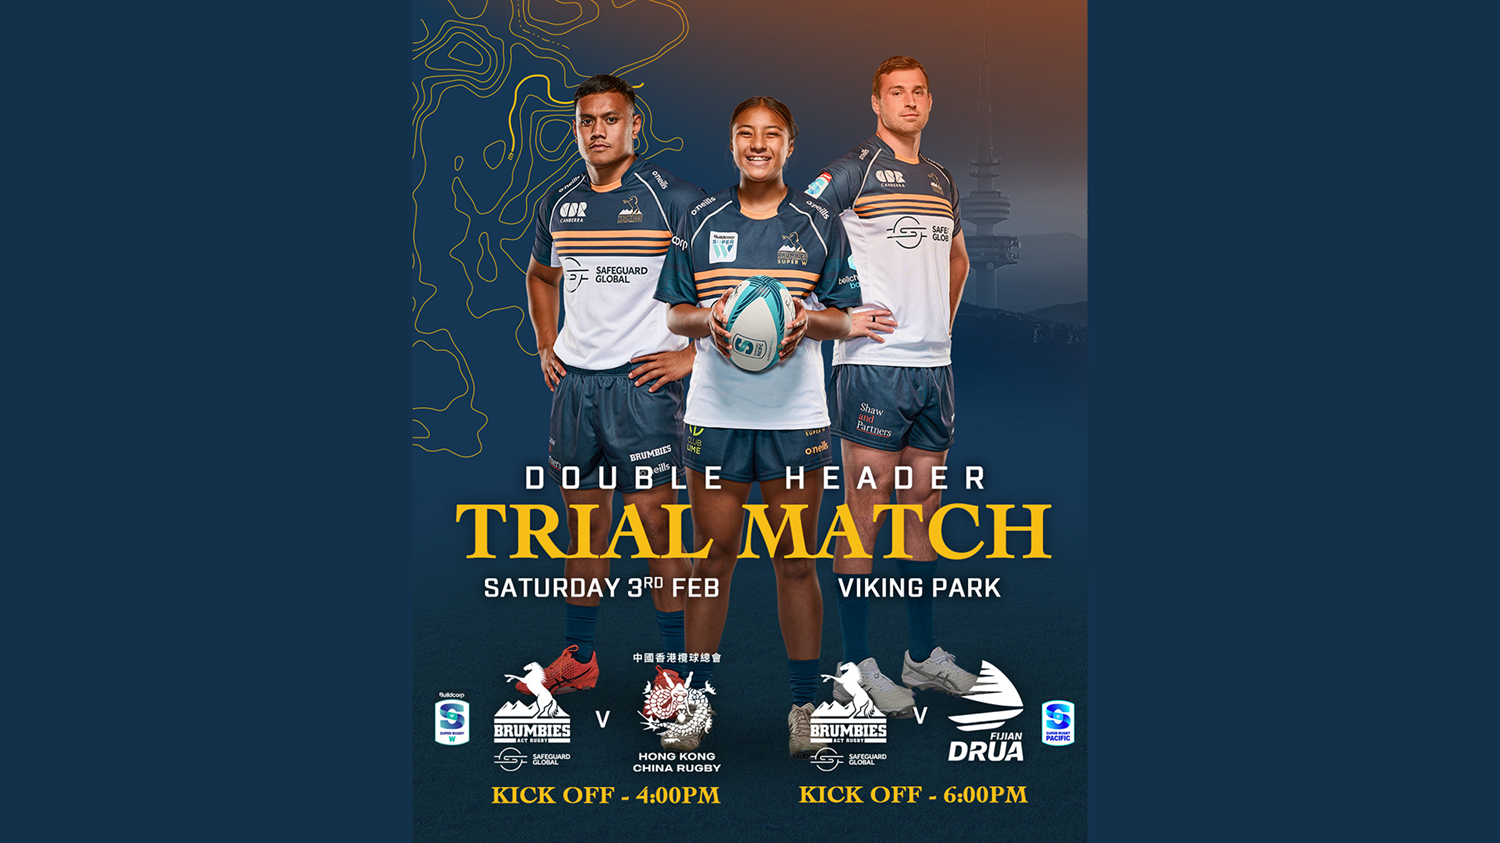 240203-Super Rugby Trials Double Header - Trial Match - Brumbies v Fijian Drua Slate Image